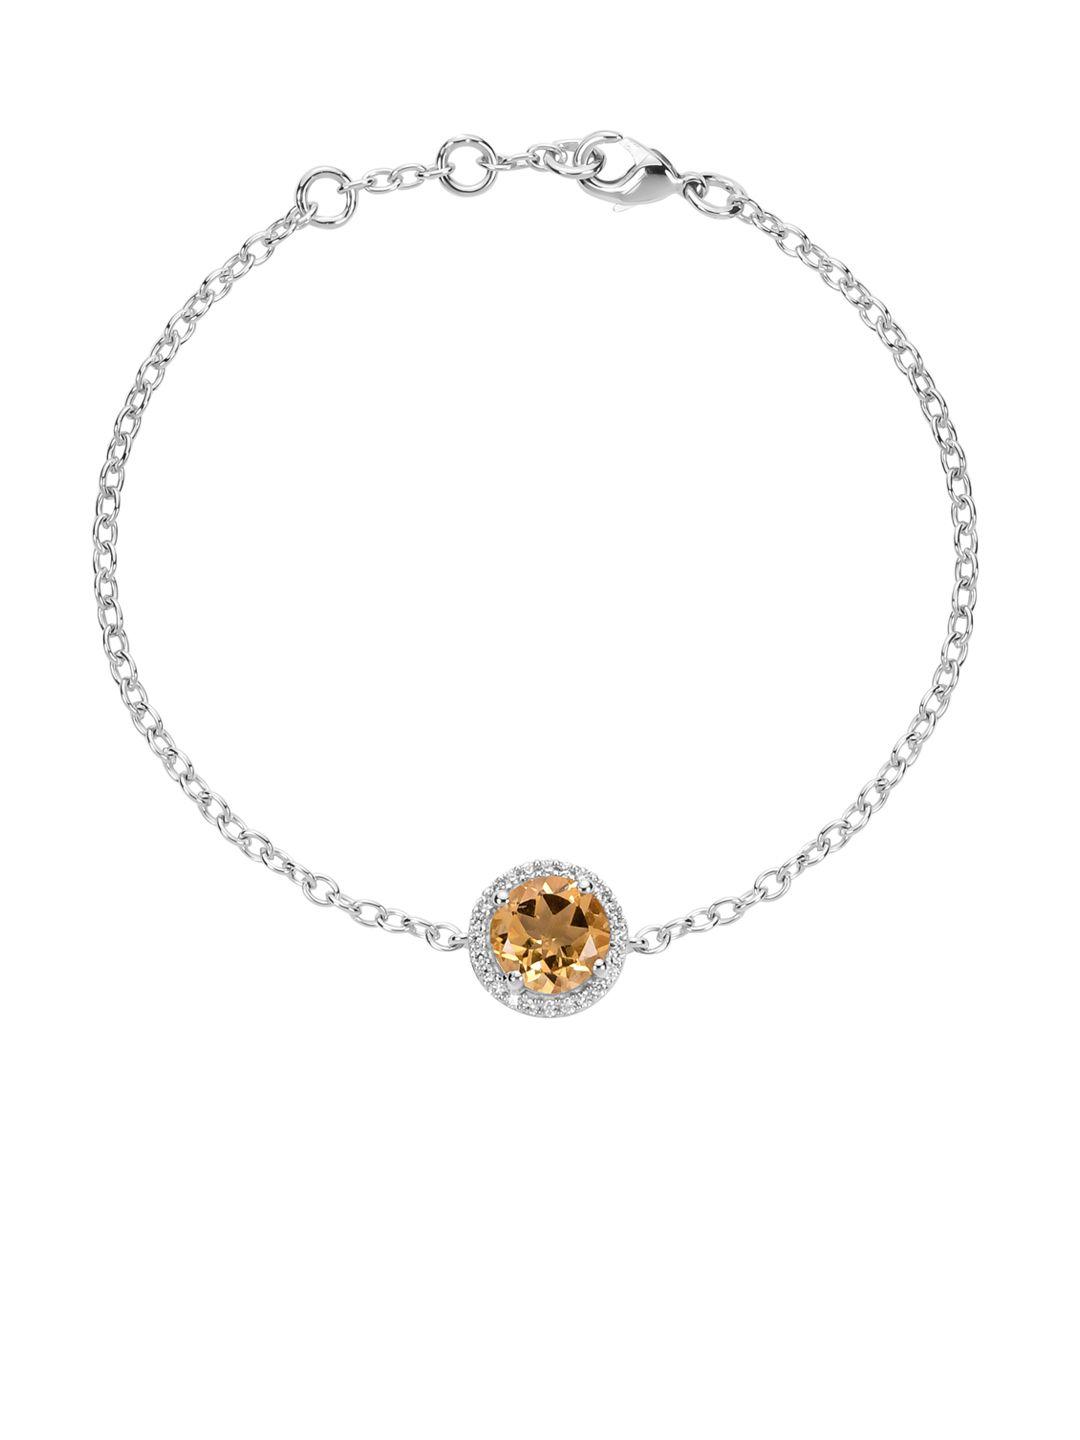 la soula 925 sterling silver silver-plated yellow & white stone-studded bracelet rakhi